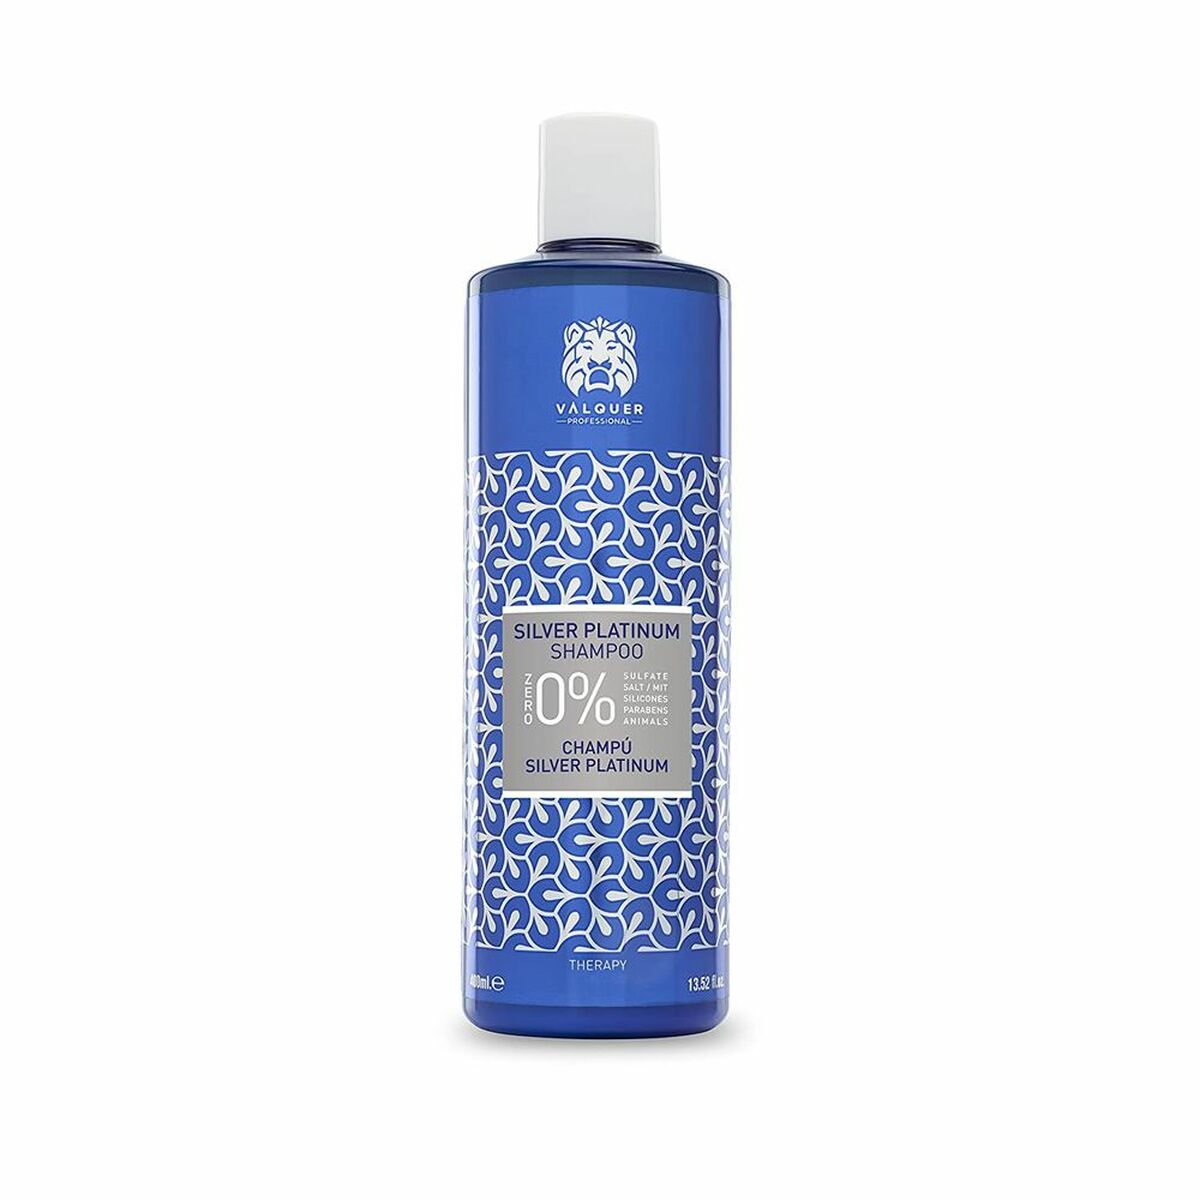 Colour Neutralising Shampoo SIlver Platinum Zero Valquer (400 ml)